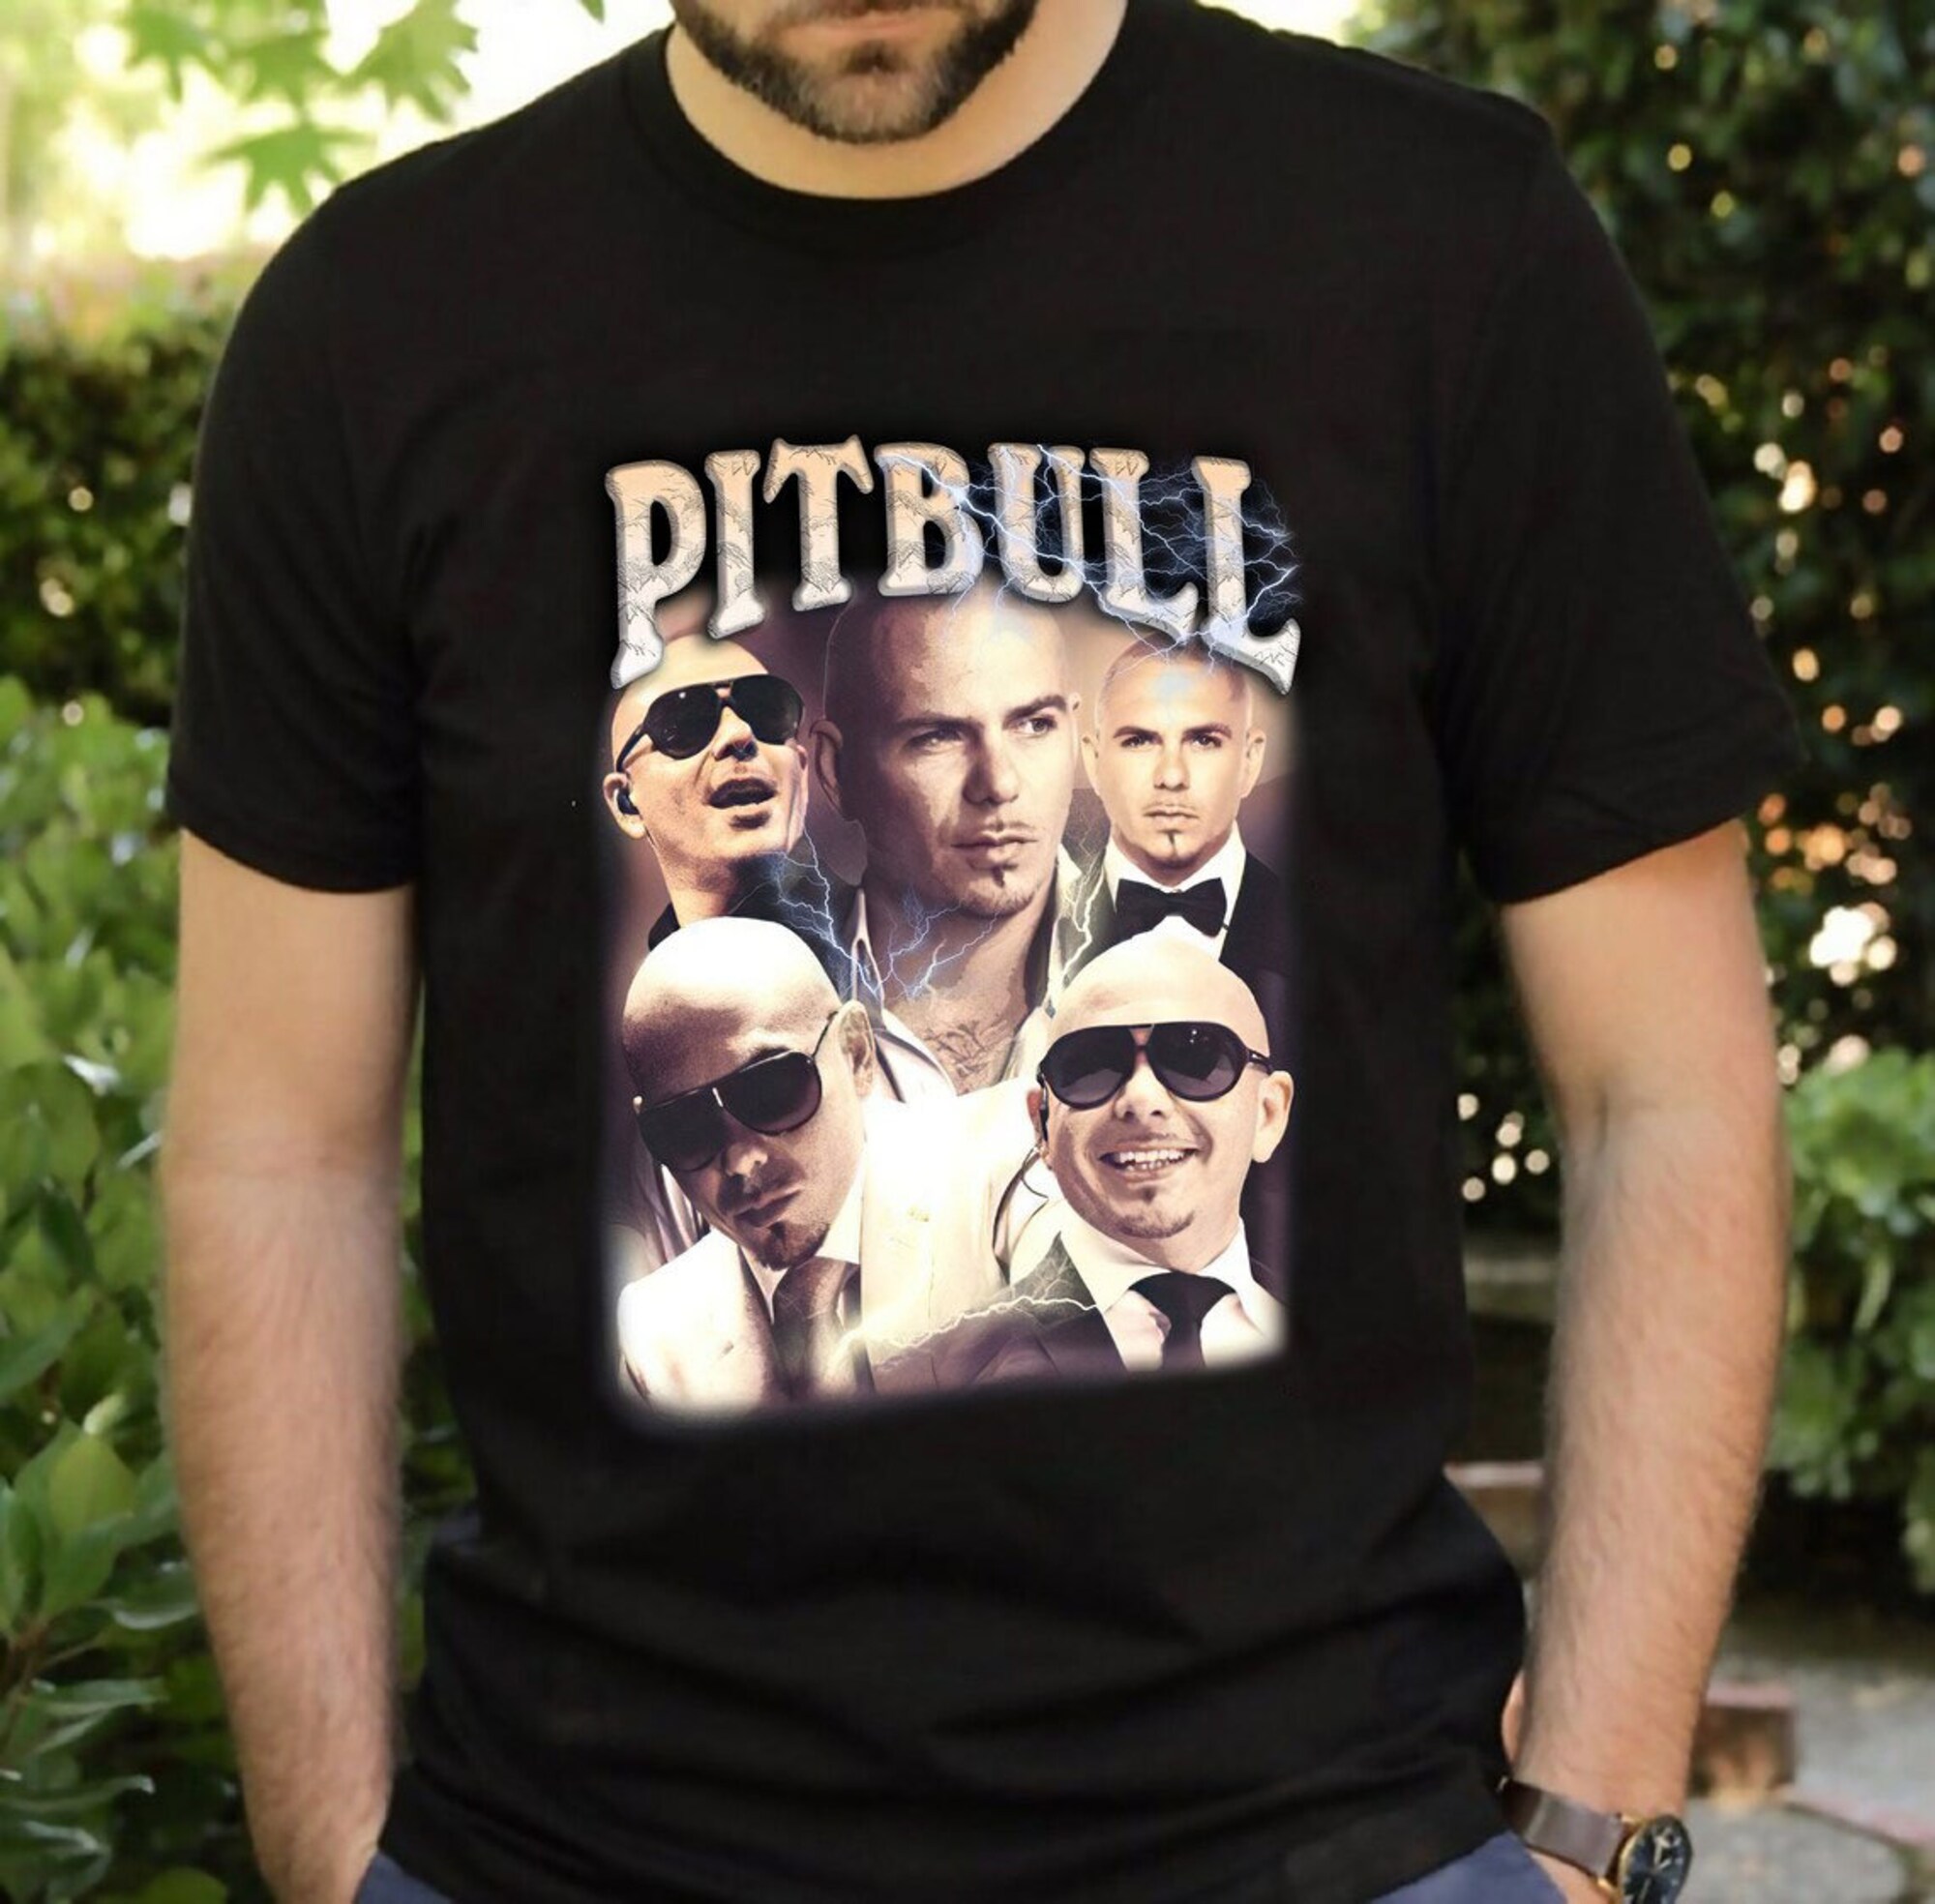 Discover Pitbull Shirt, Hip Hop Shirt, Rap shirt, Vintage 90s, Retro 90 Shirt, Pitbull tshirt, pitbull tee, pitbull t-shirt vintage shirt retro shirt